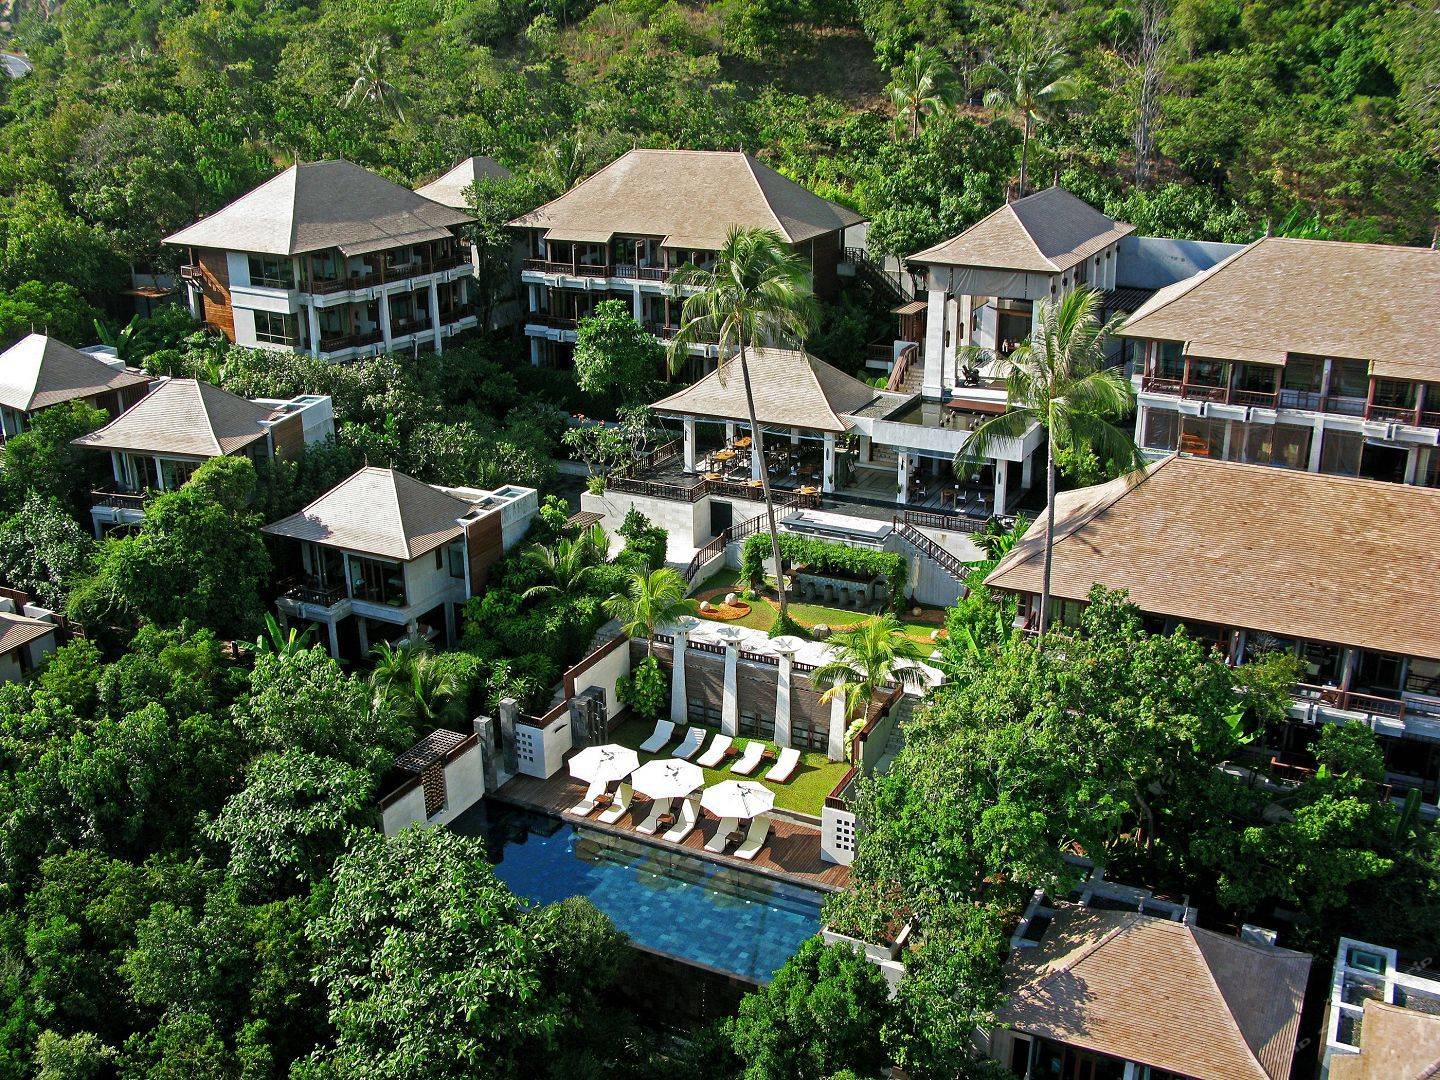 泰国苏梅岛四季度假村 Four Seasons Resort Koh Samui, Thailand by bensley – mooool木藕设计网